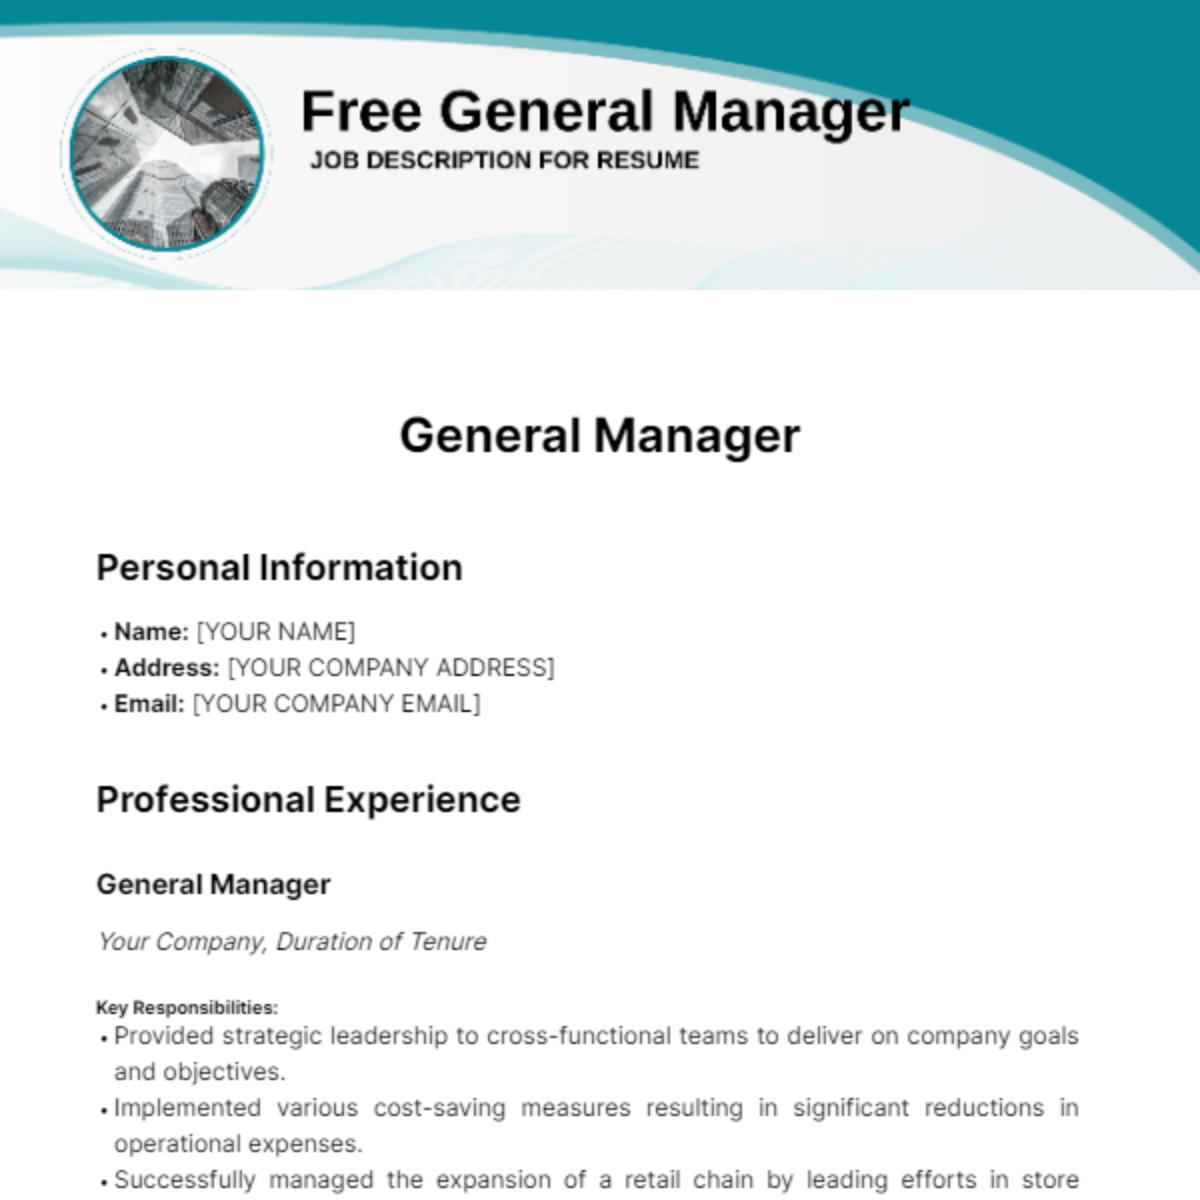 General Manager Job Description for Resume Template